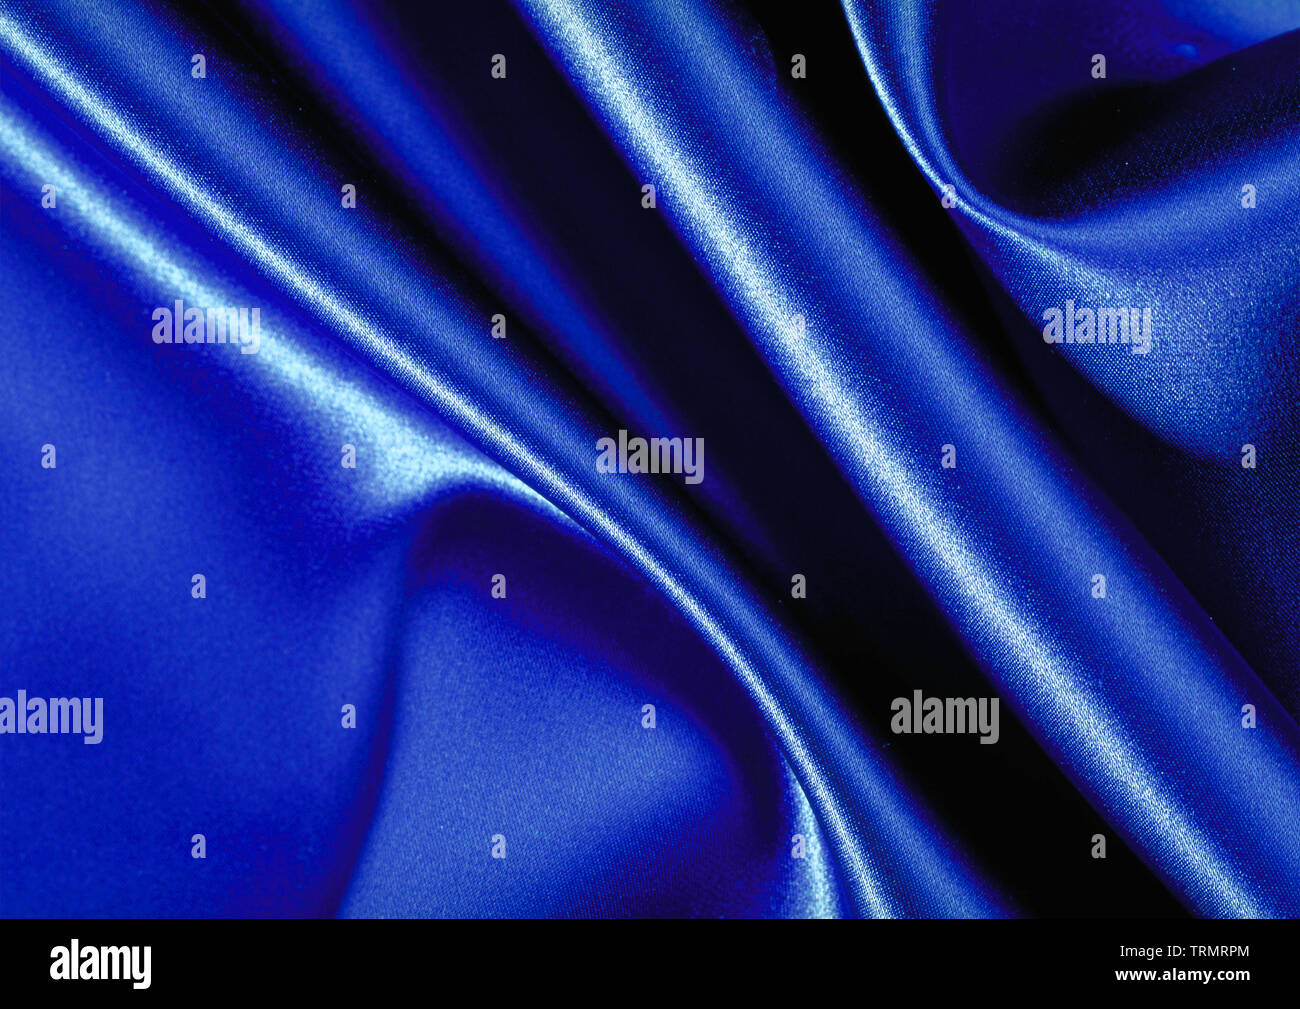 Elegant blue silk or satin luxury texture abstract background. Stock Photo